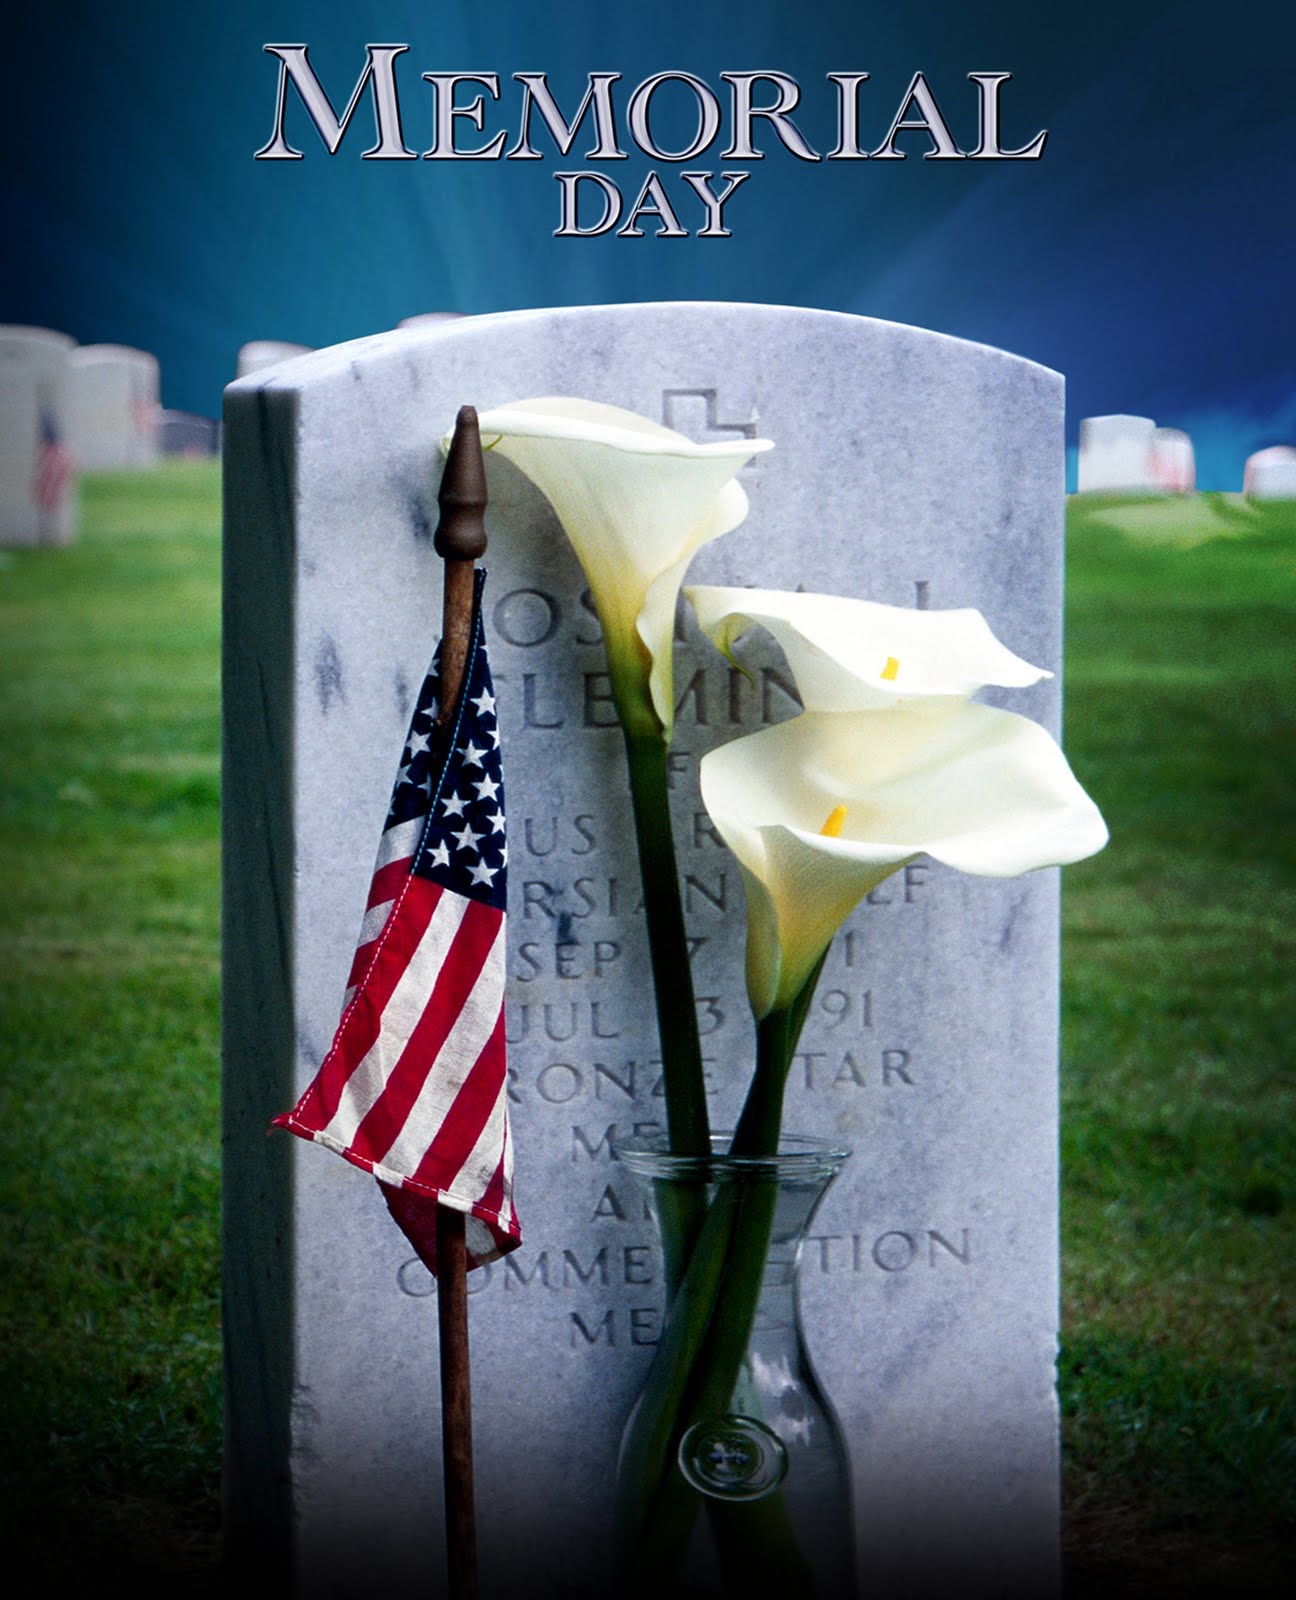 Cemetery clipart memorial day. Public domain clip art